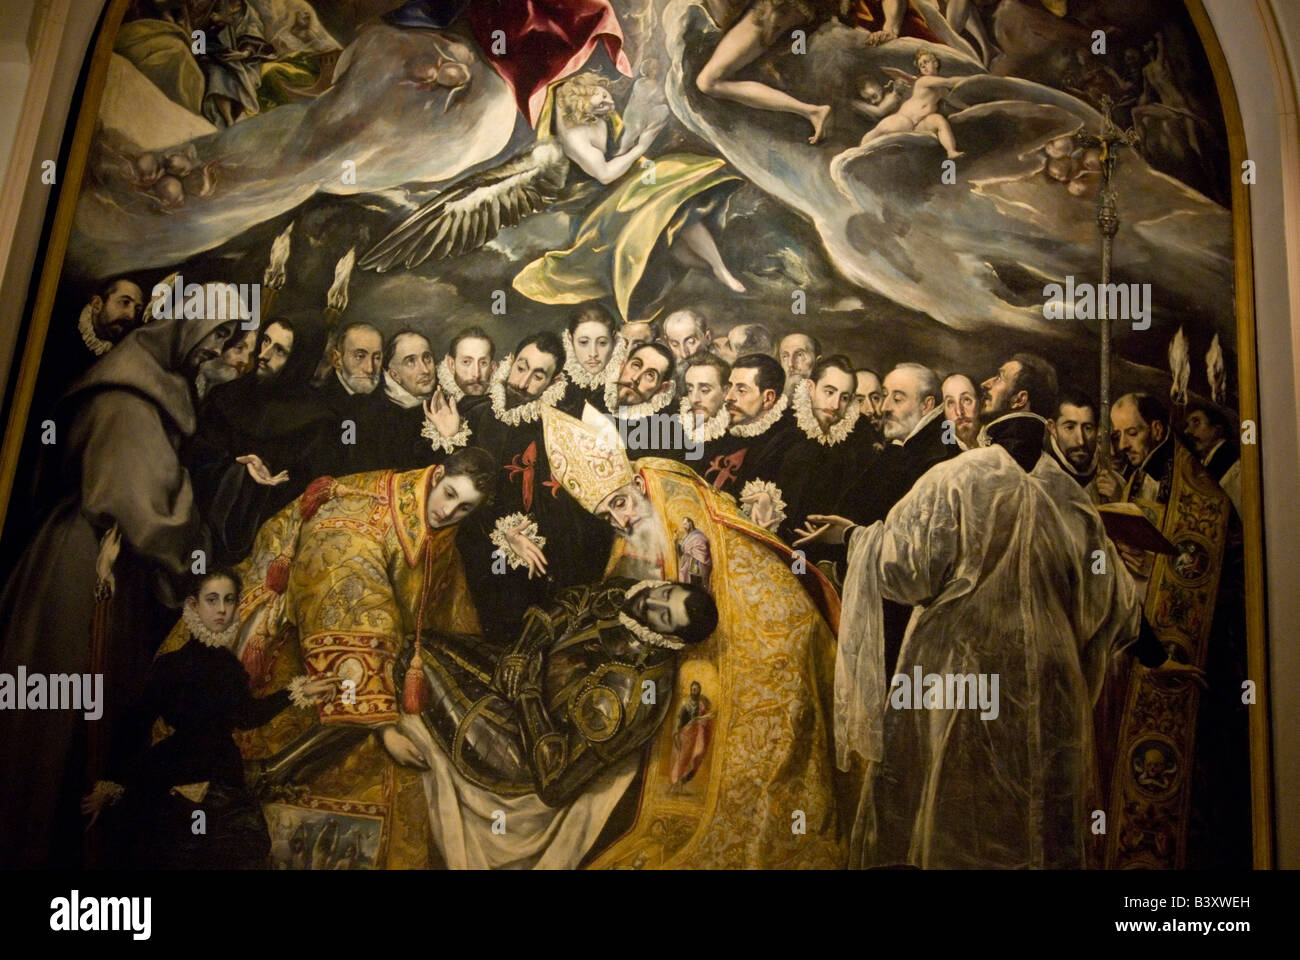 The Burial of the Count of Orgaz by El Greco TOLEDO Castile La Mancha region SPAIN Stock Photo